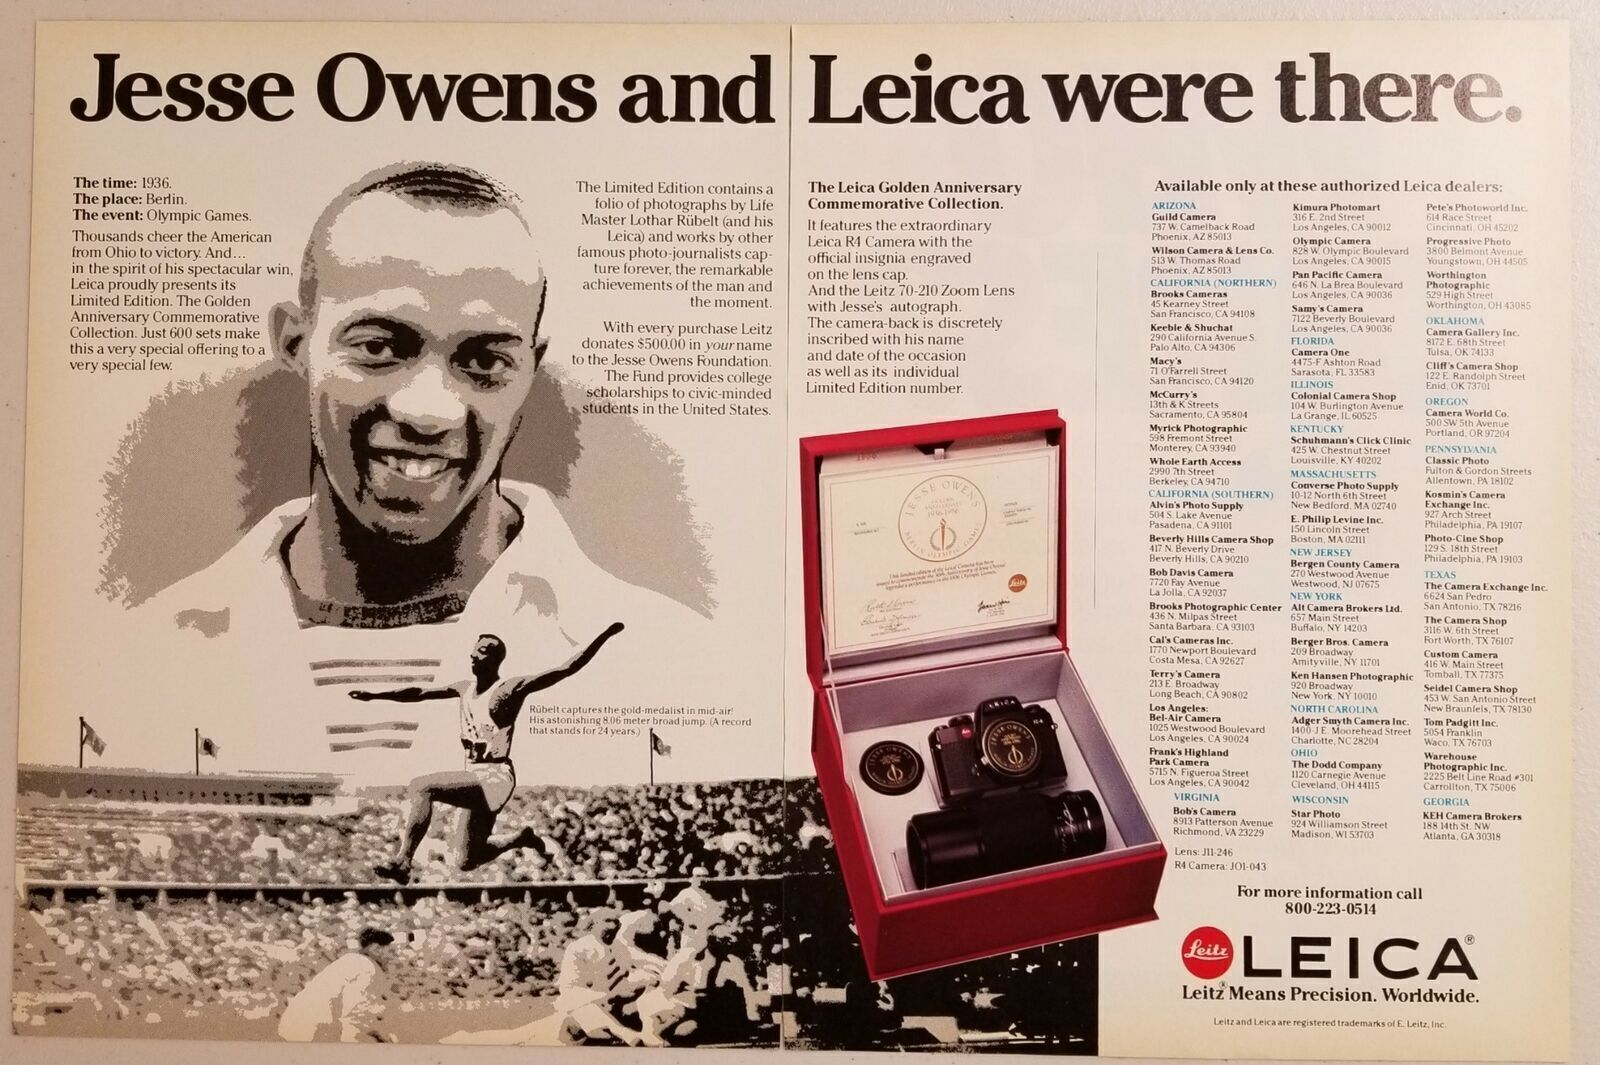 1986 Print Ad Leica R4 Camera Golden Anniversary Jesse Owens \'36 Berlin Olympics